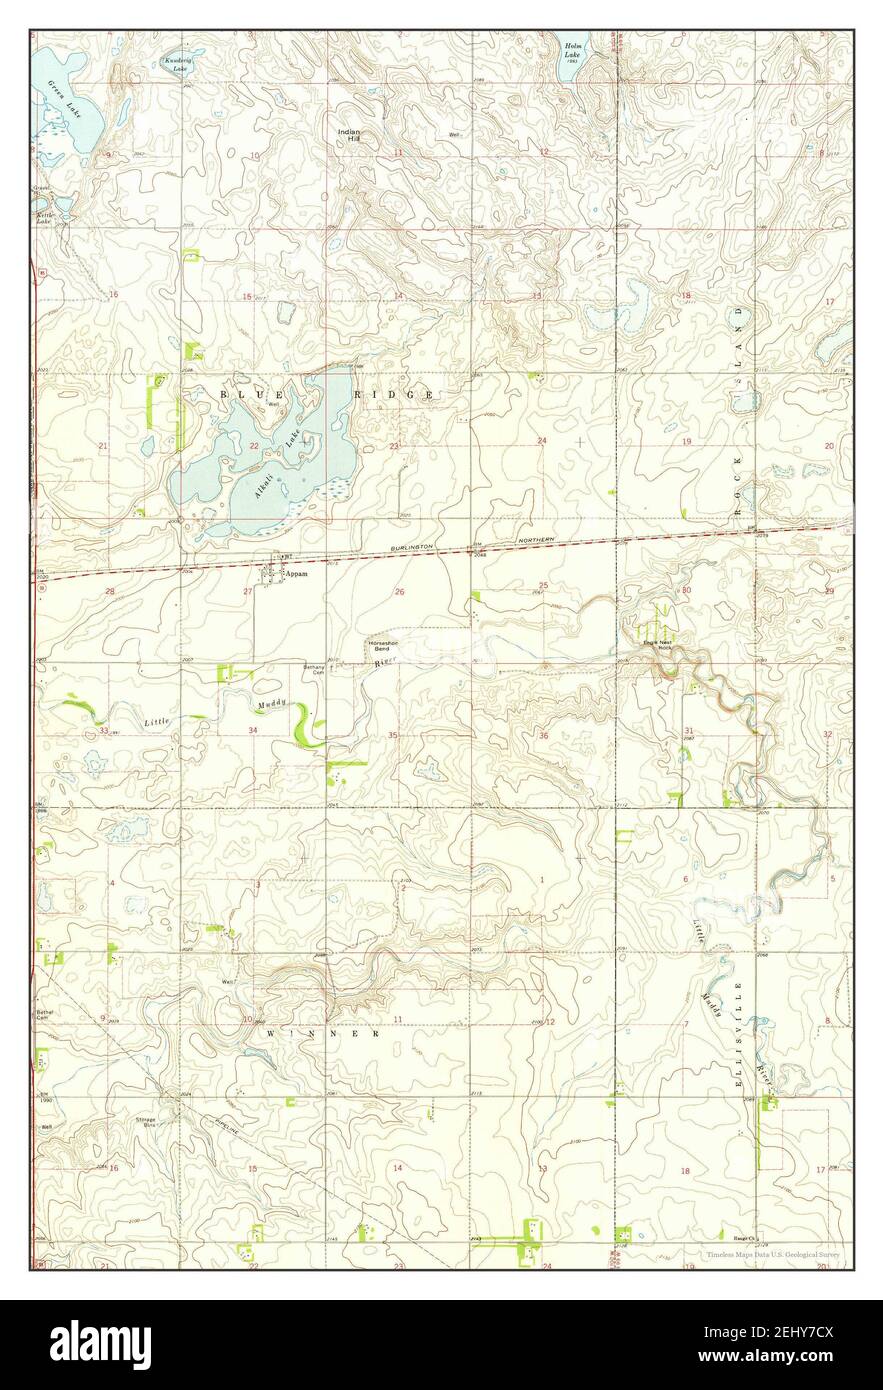 Appam, North Dakota, map 1977, 1:24000, United States of America by Timeless Maps, data U.S. Geological Survey Stock Photo